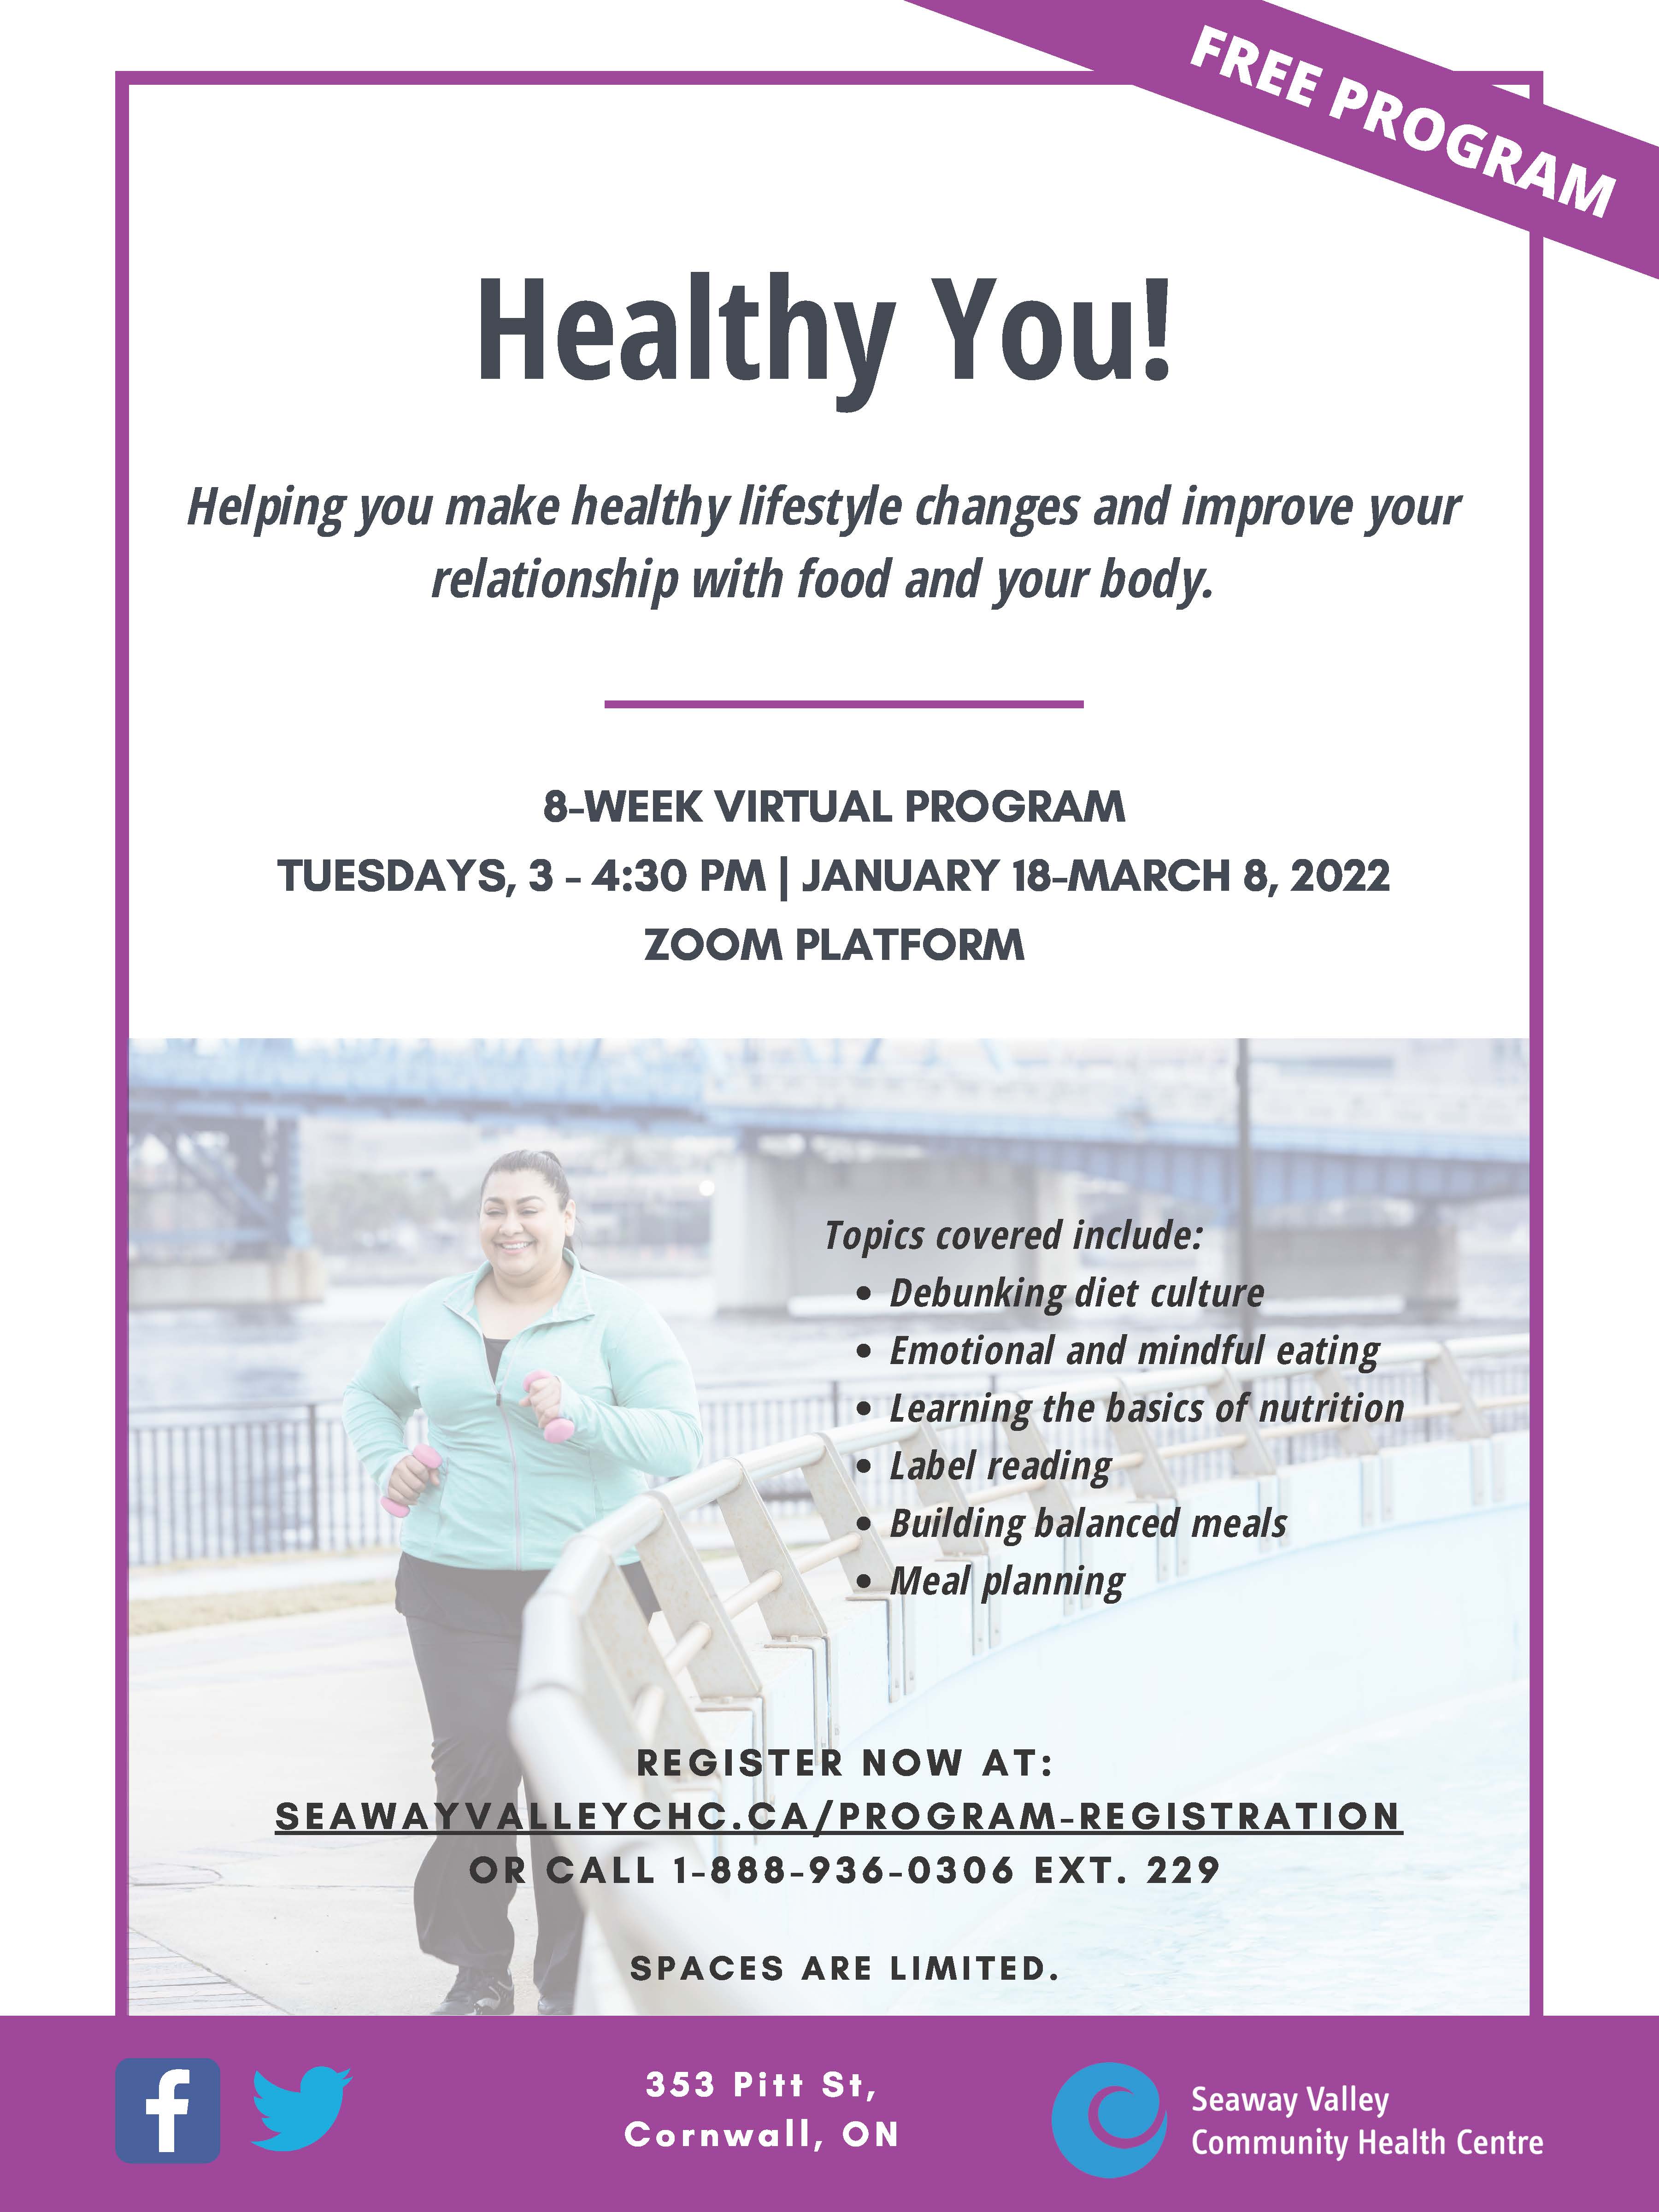 Seaway Valley Healthy You Program Poster